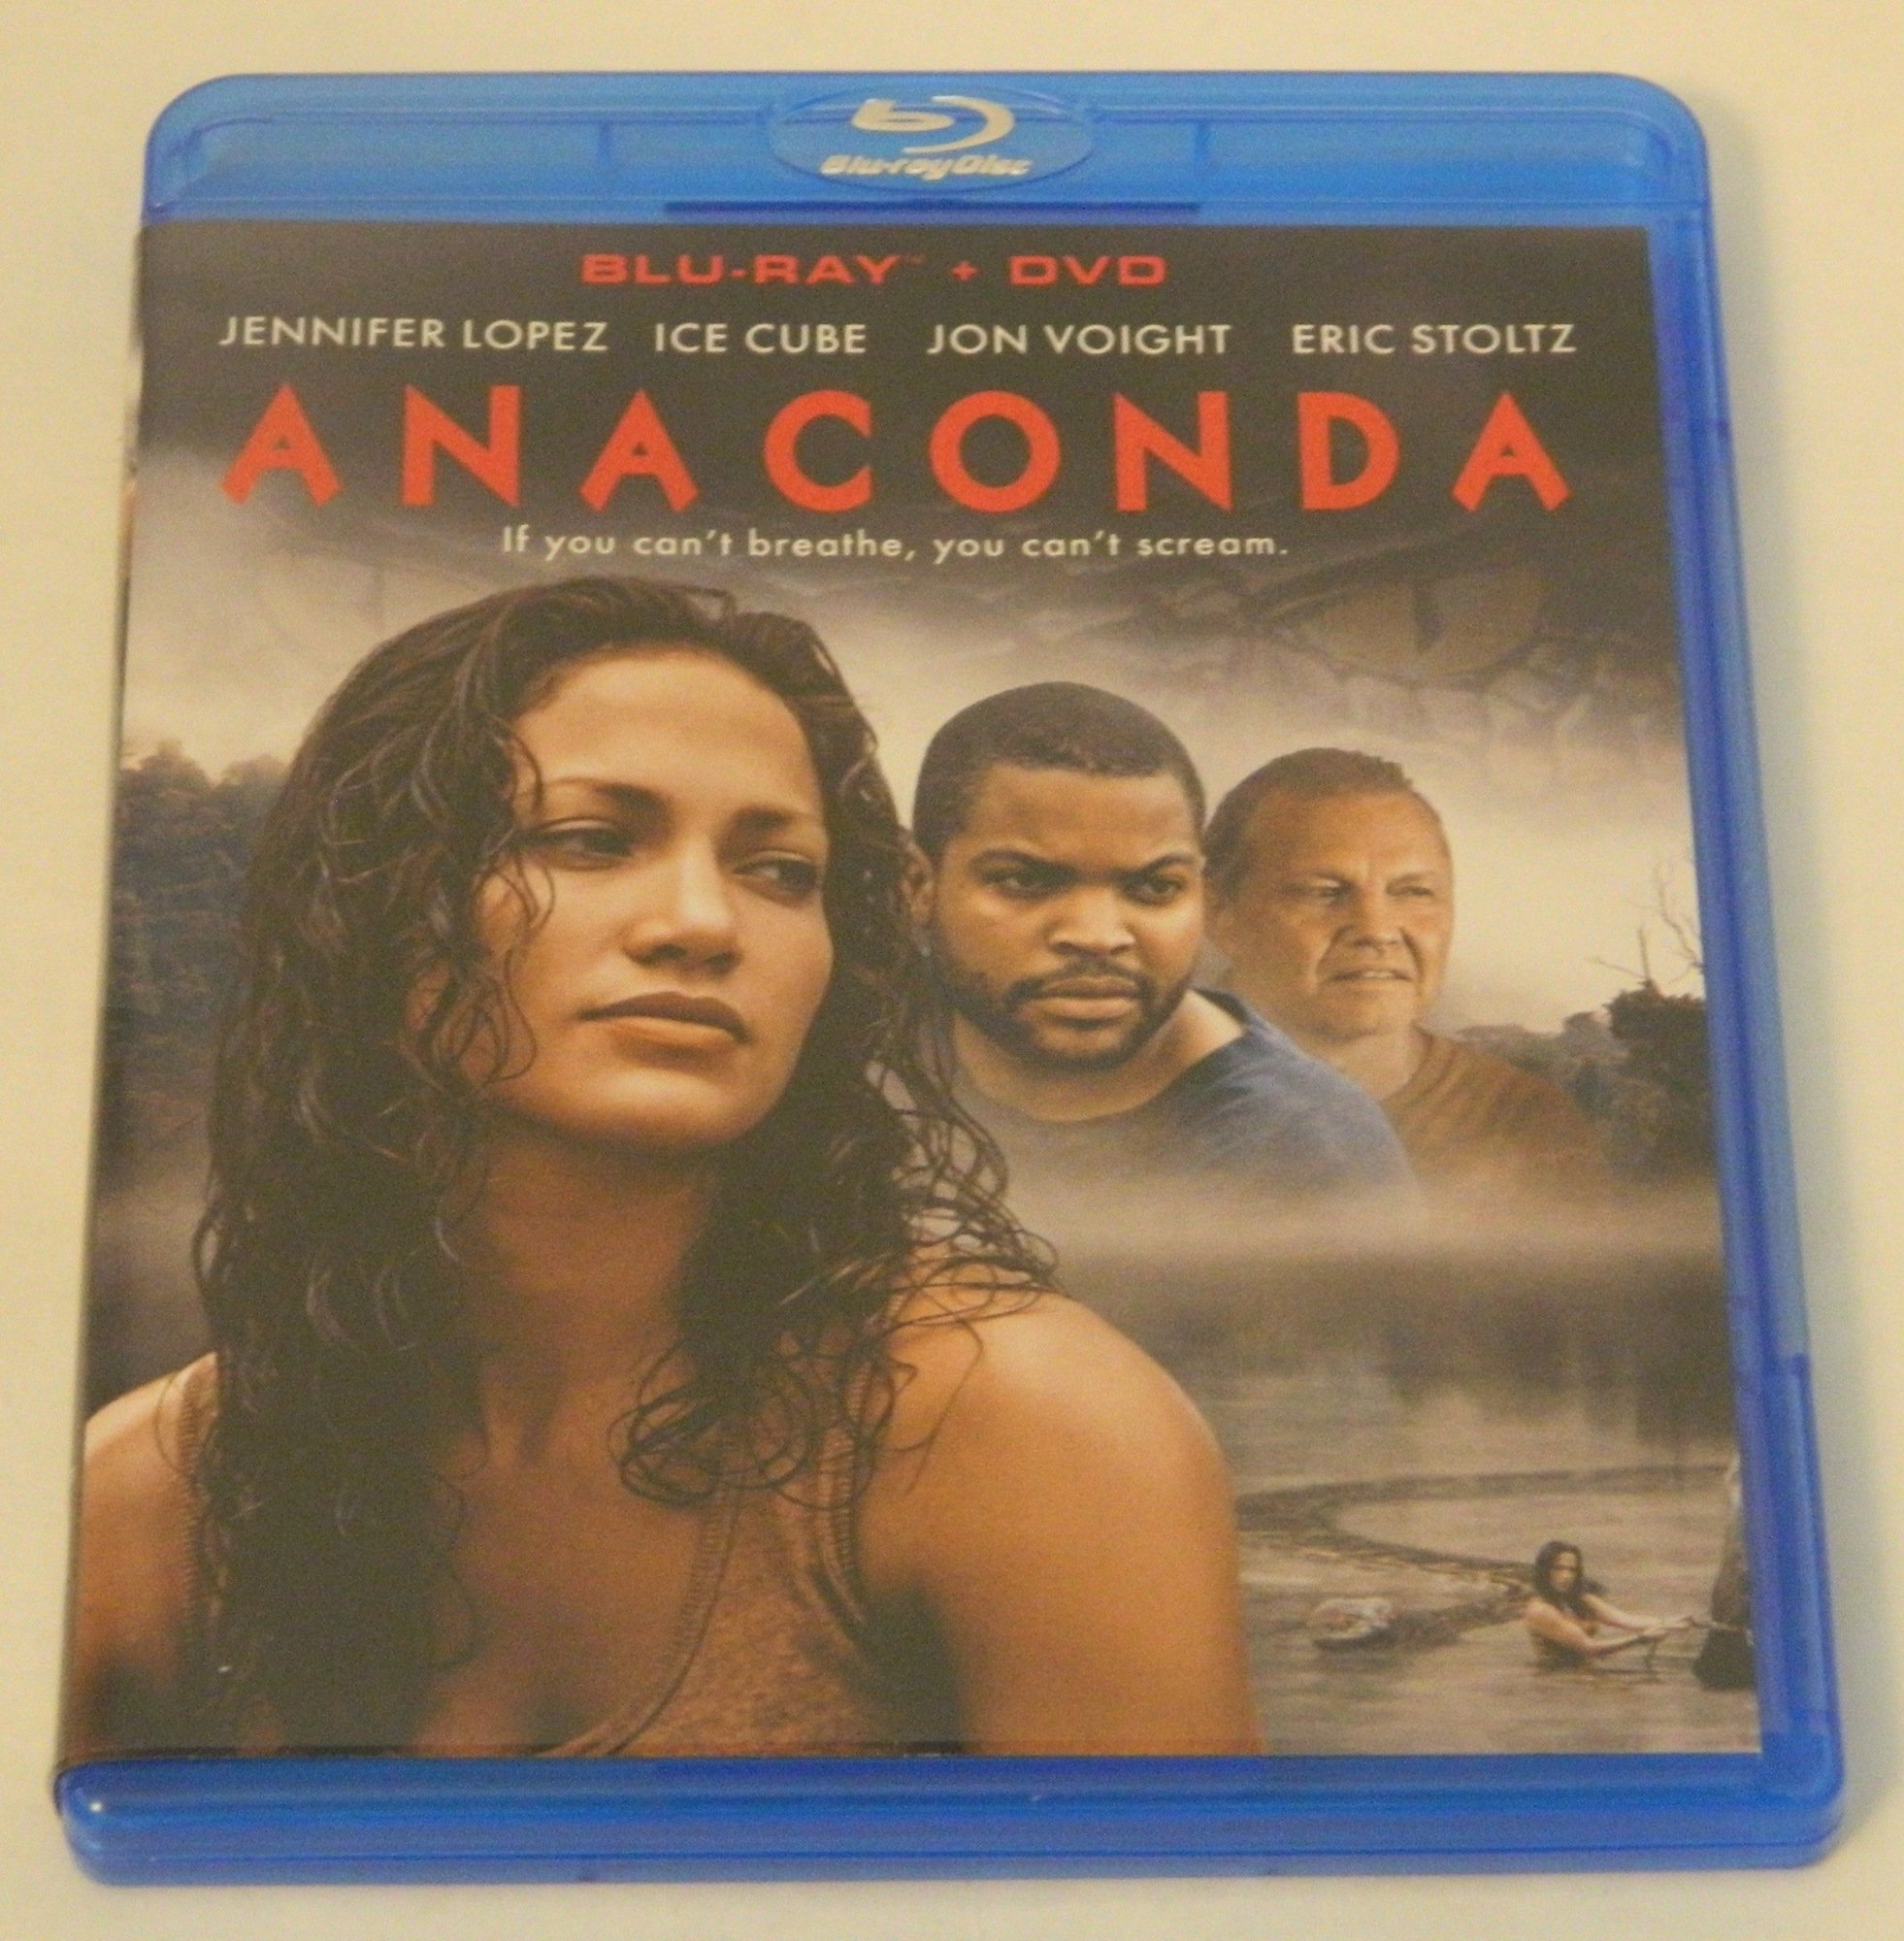 Anaconda Blu-ray